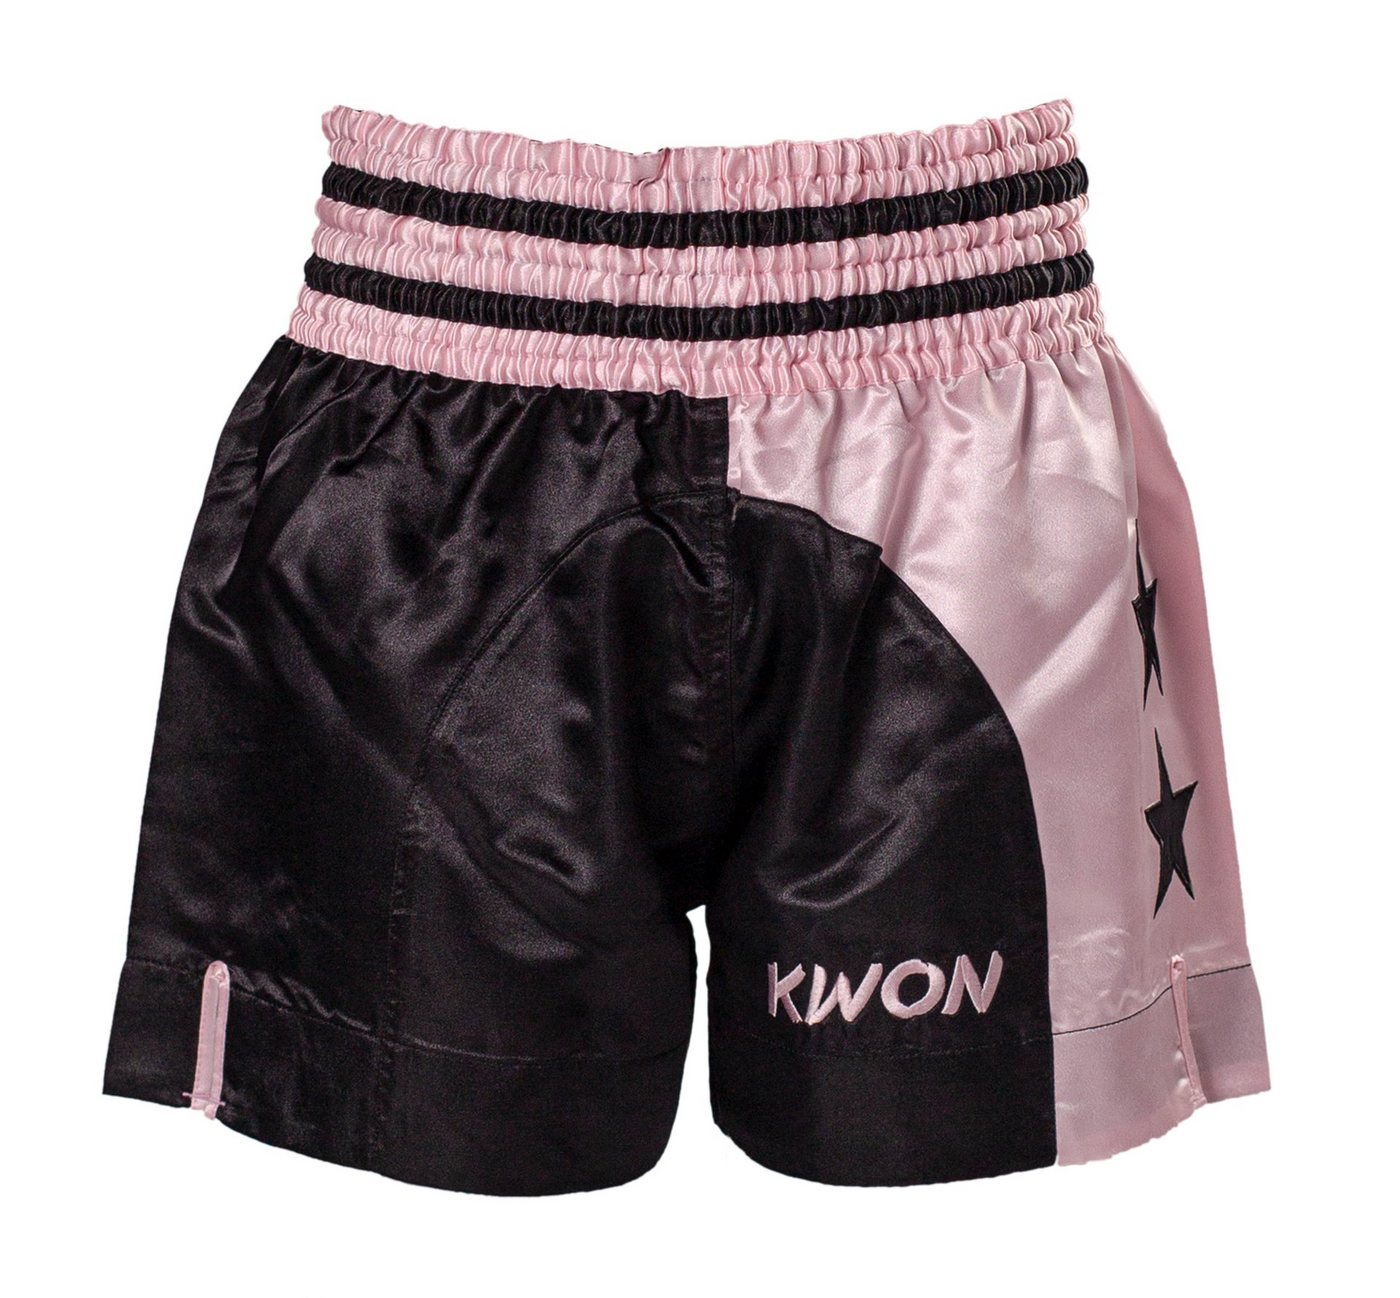 KWON Sporthose Thaiboxhose Damen Muay Thai Box Shorts Kickboxhose kurz pink rosa MMA (Edler Look) traditioneller Schnitt, Sterne von KWON